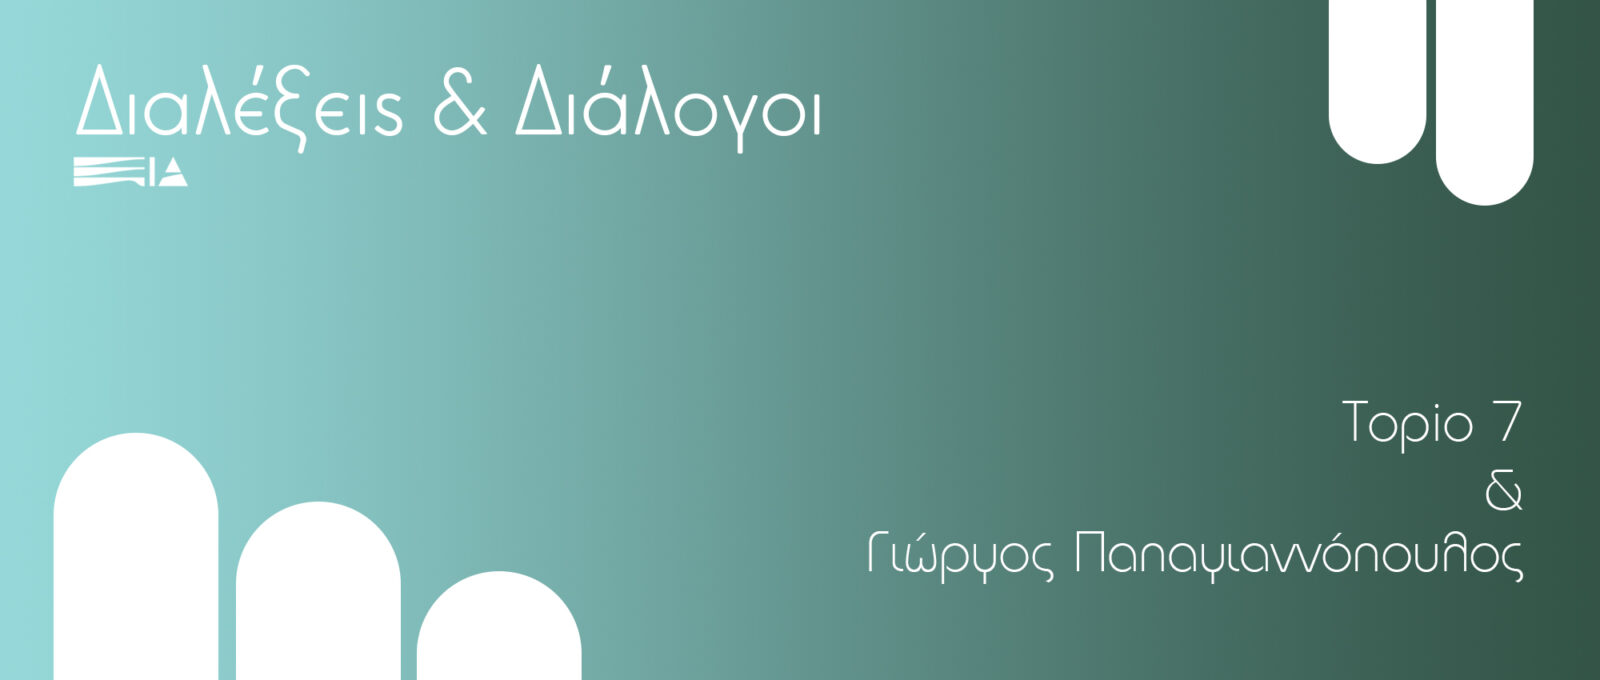 Archisearch Διαλέξεις & Διάλογοι: Τopio7 & Γιώργος Παπαγιαννόπουλος | 20ος Κύκλος Διαλέξεων Ελλήνων Αρχιτεκτόνων EIA